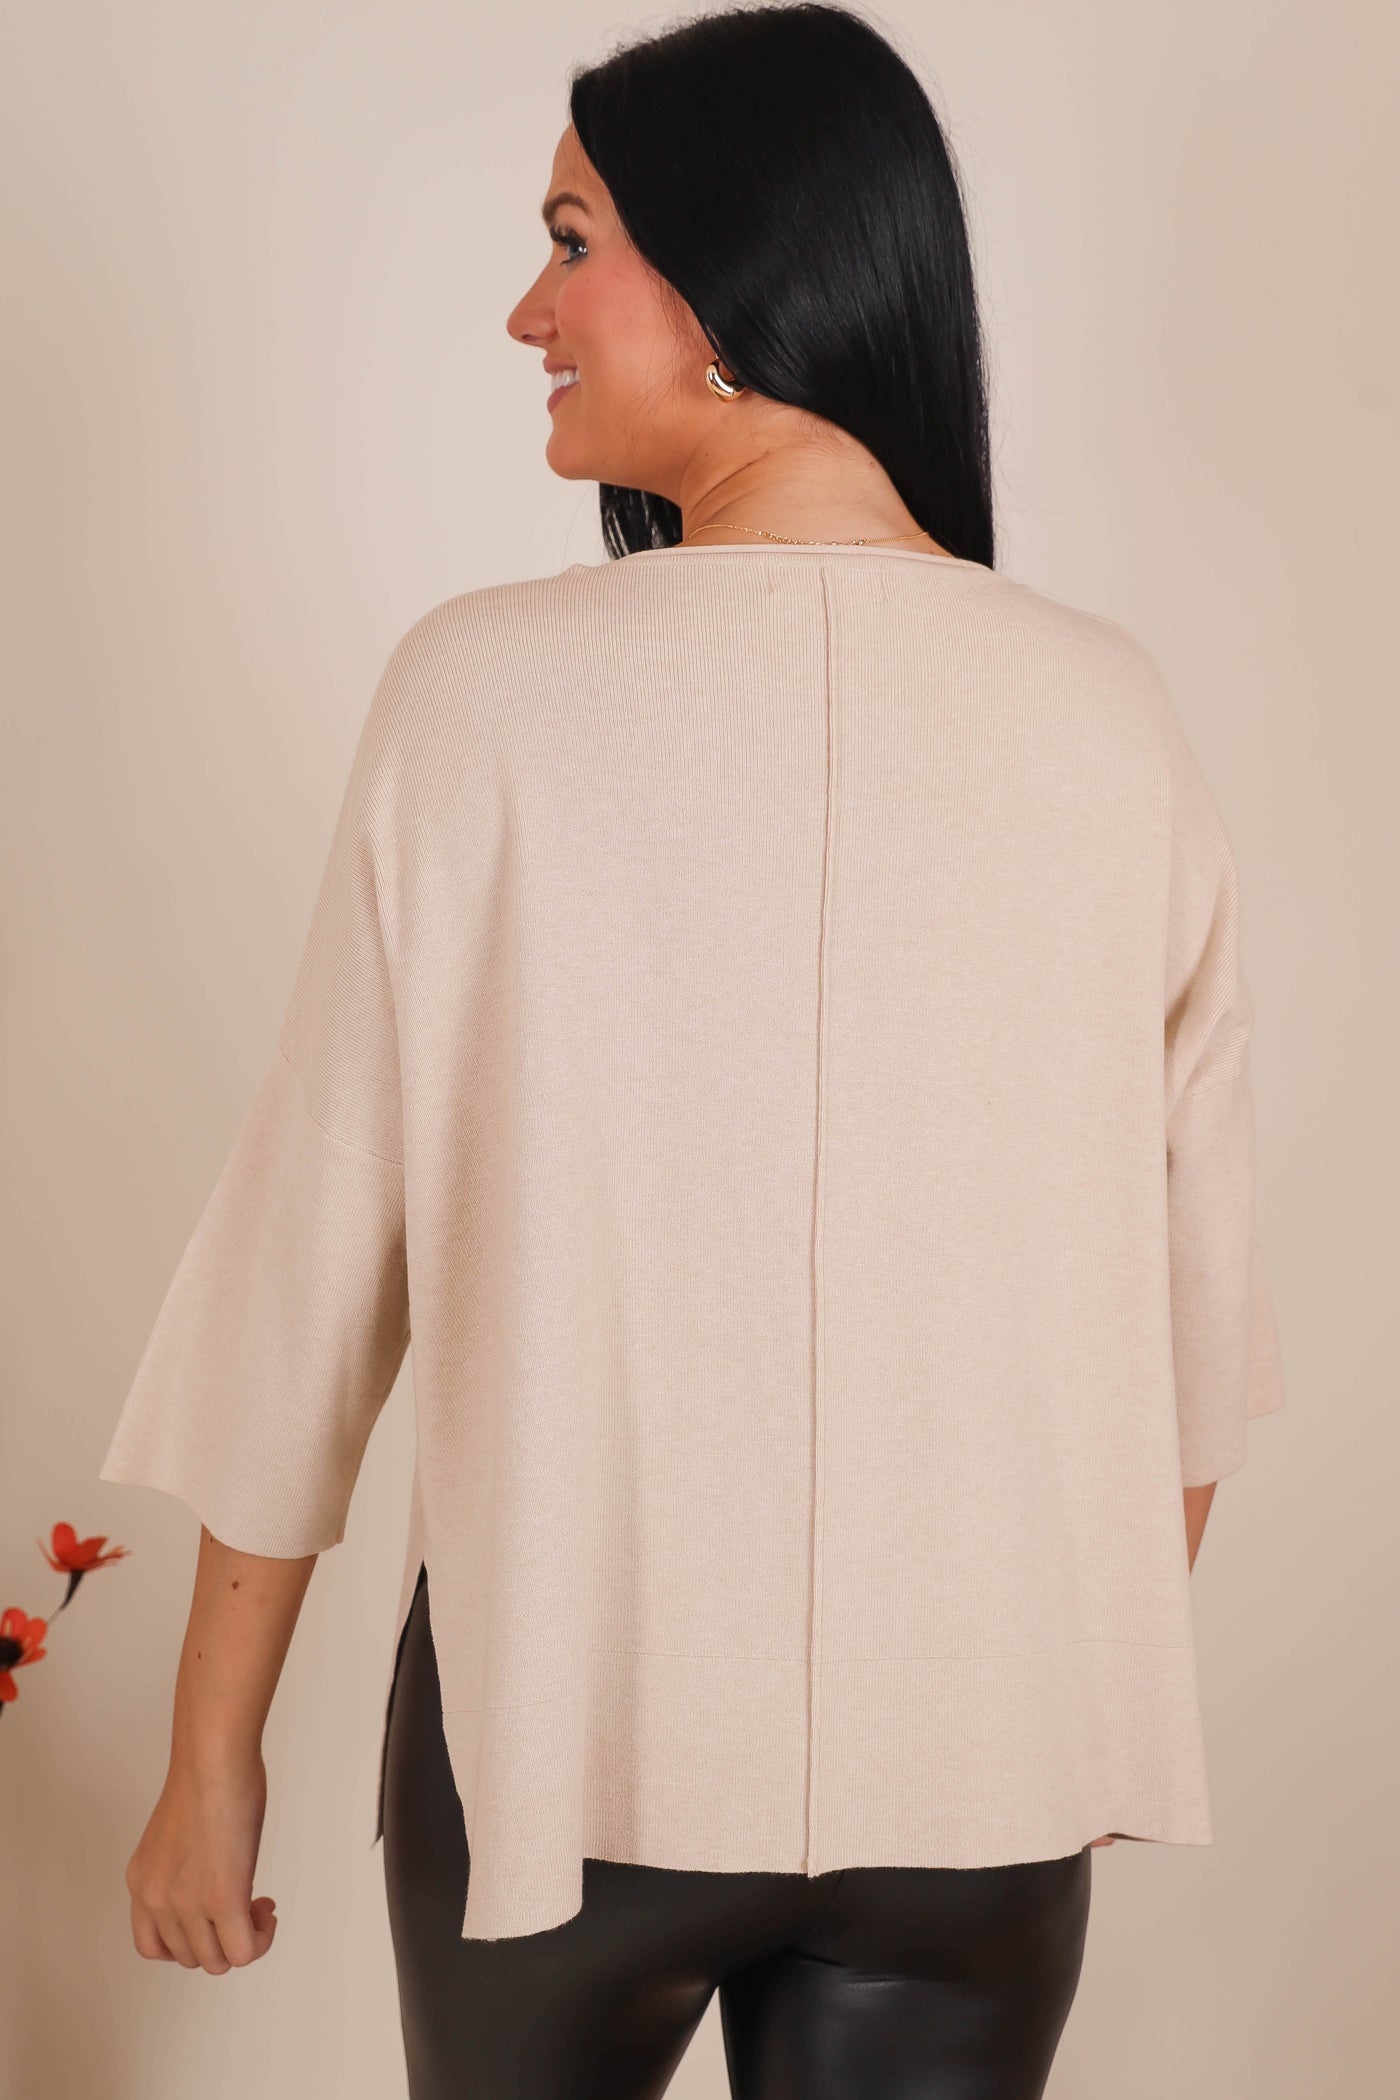 Women's Relaxed Fit Sweater- Women's Buttery Soft Sweater- Women's Oatmeal Oversized Sweater